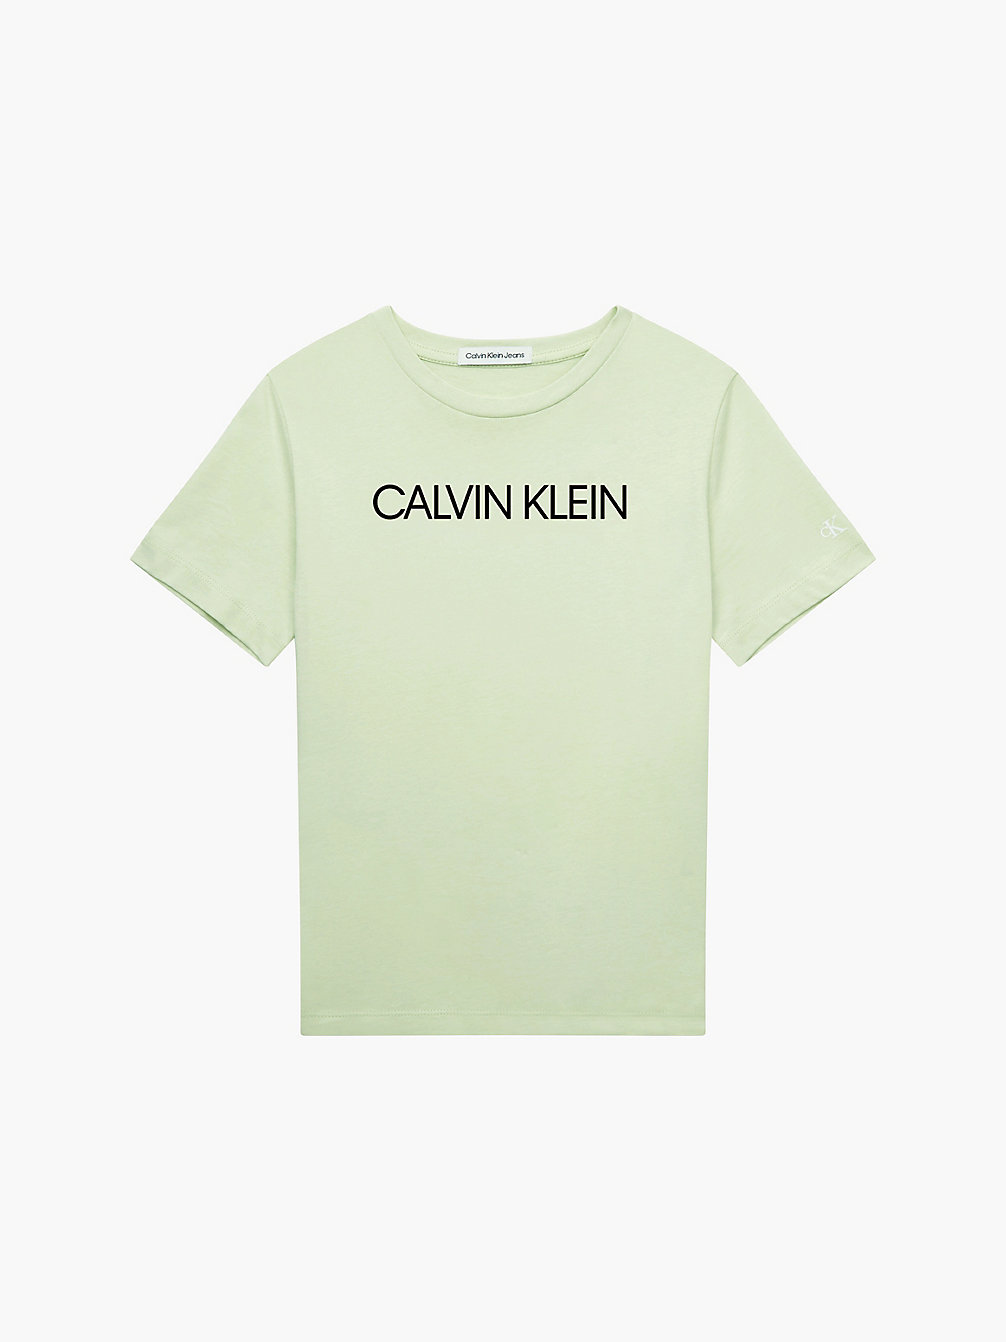 Camiseta Infantil De Algodón Orgánico Con Logo > SEAFOAM GREEN > undefined kids unisex > Calvin Klein